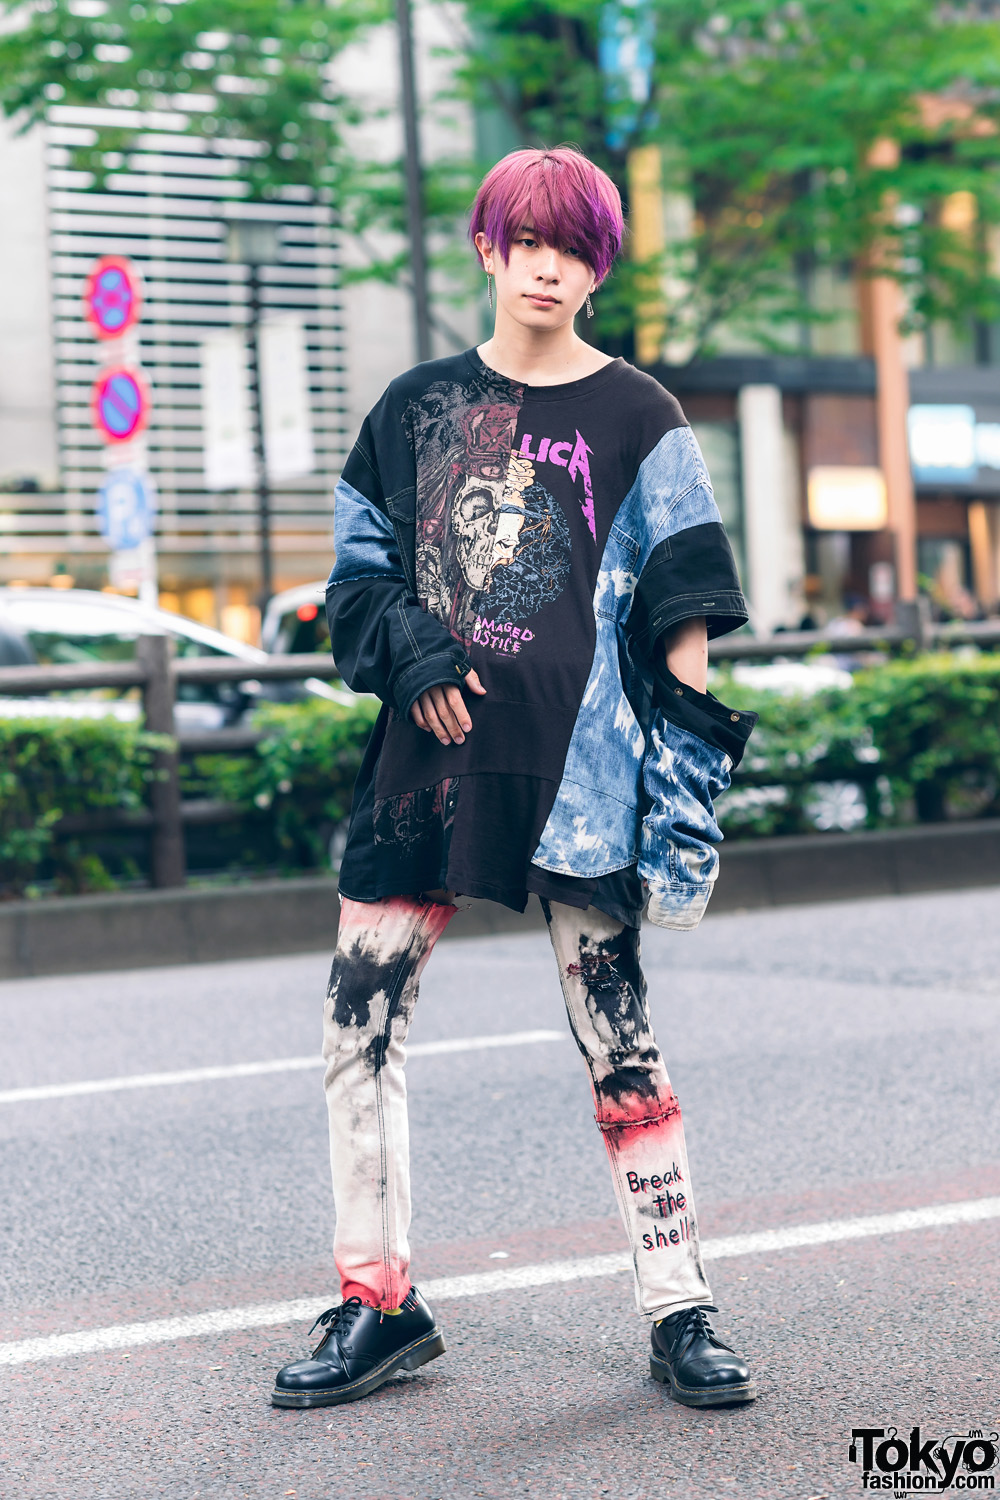 Japanese Model's Graphic Print Streetwear Style w/ Purple Hair, Chain Earrings, Cote Mer Sweatshirt, Tie Dye Pants & Dr. Martens Shoes